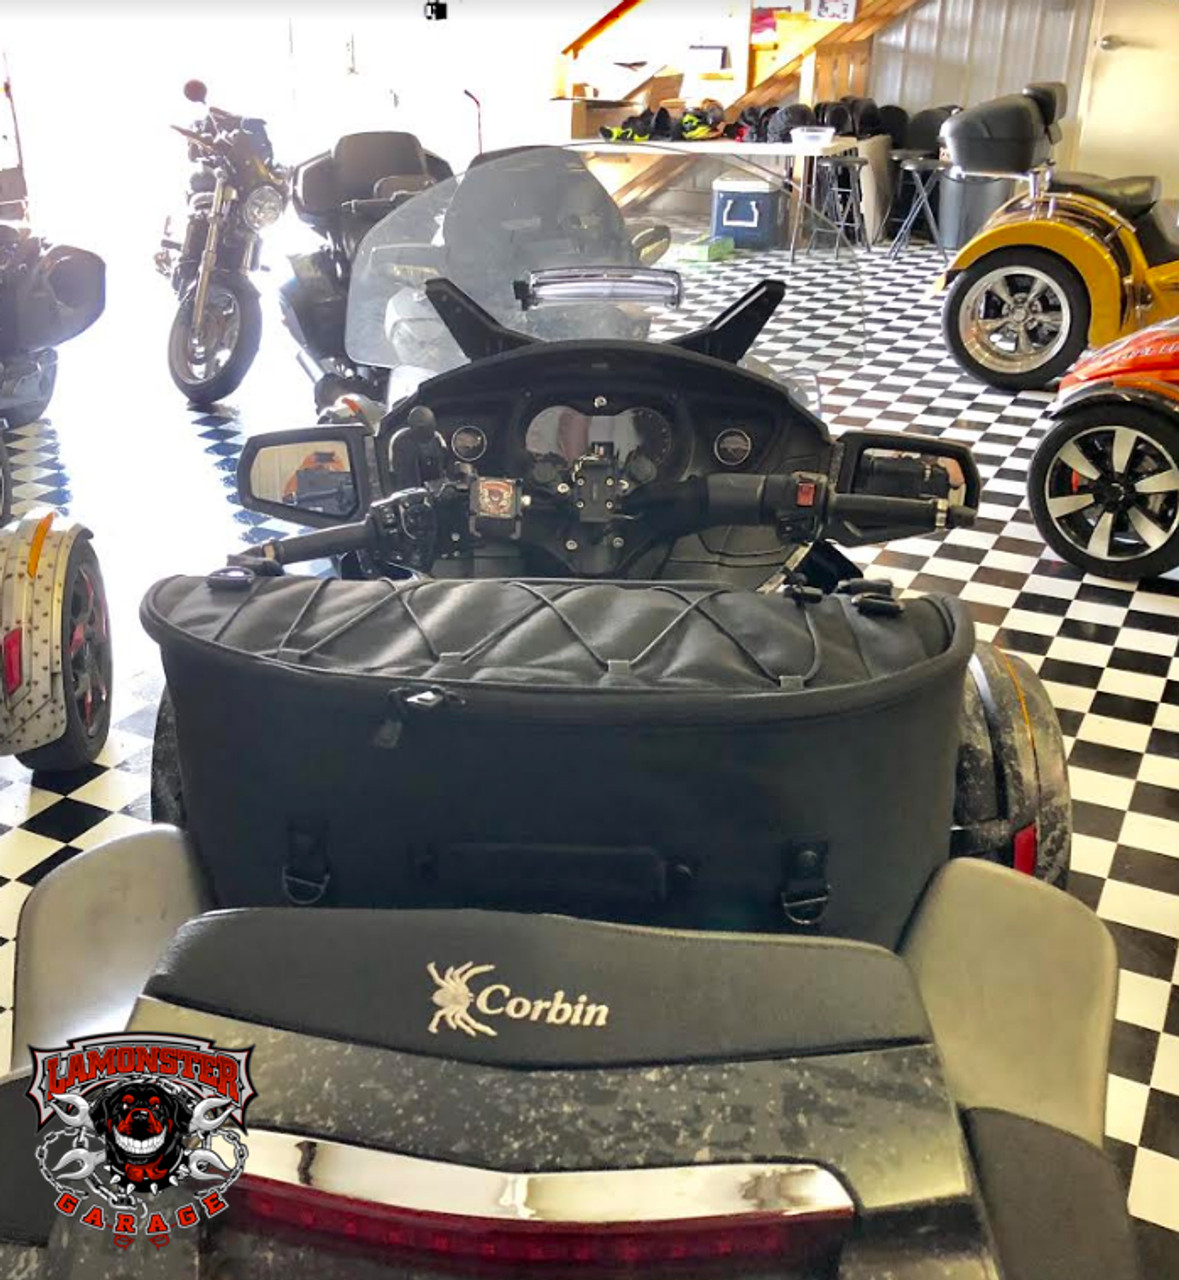 Kuryakyn Momentum Wanderer Touring Seat Bag (KYN-5286) - Lamonster Garage®
#motorcycle #canamspyder #motorcycleluggage 
Shown on 2014 RT-S